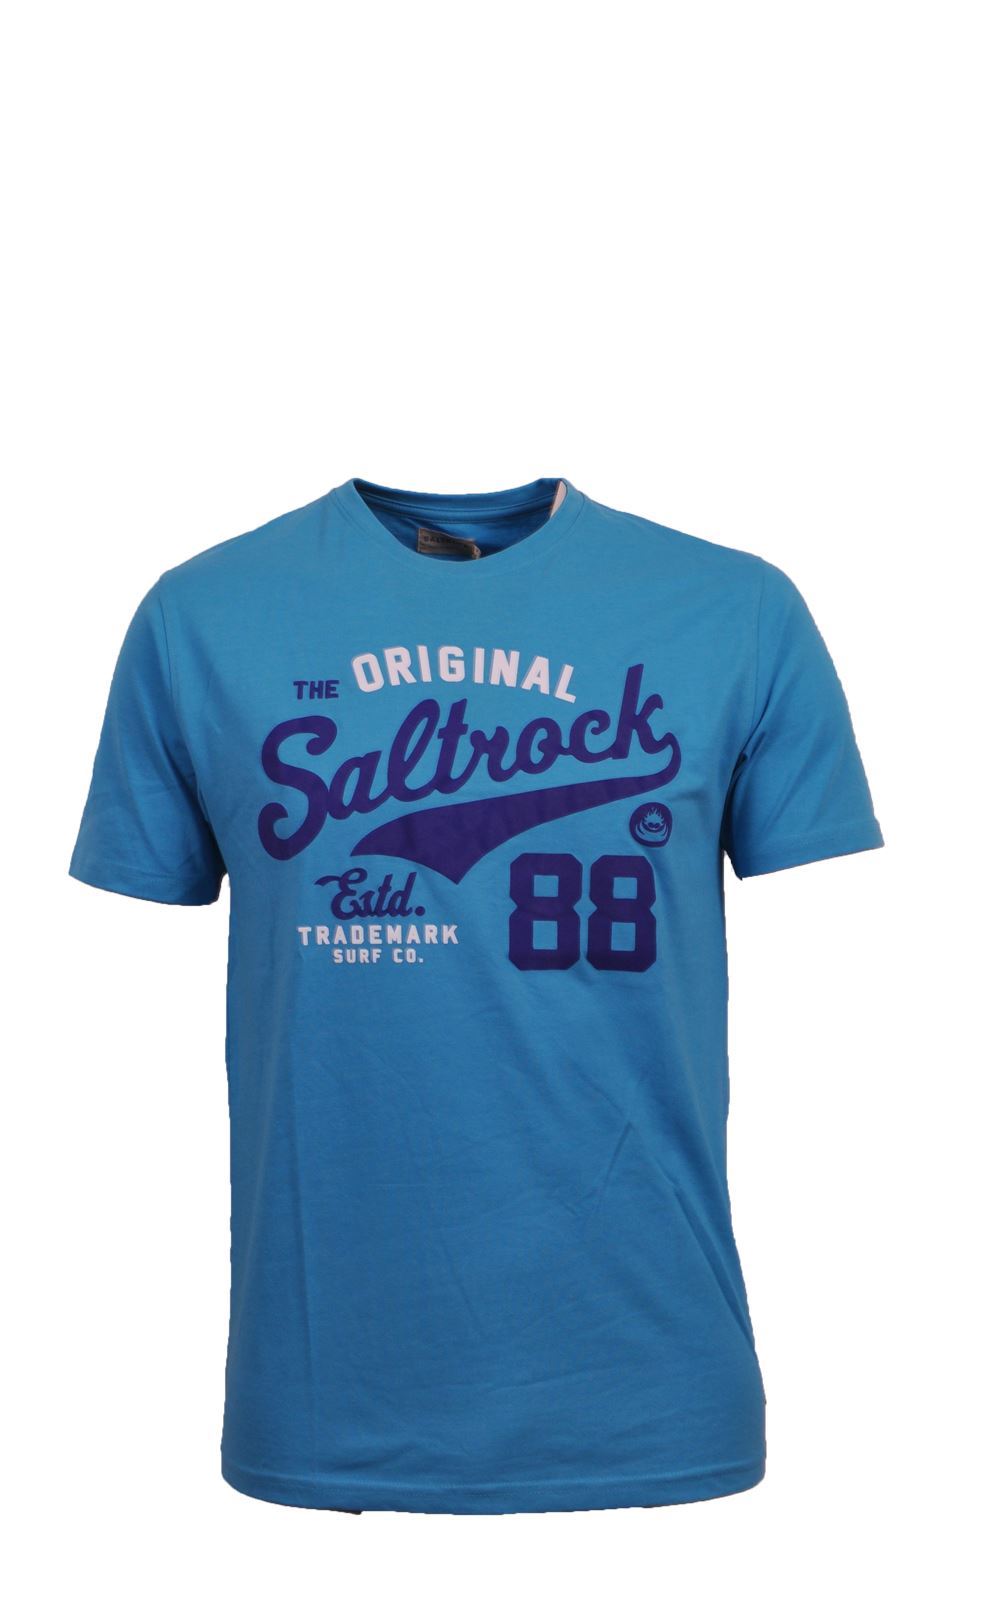 S&T Moore. Saltrock T-Shirt 11901096